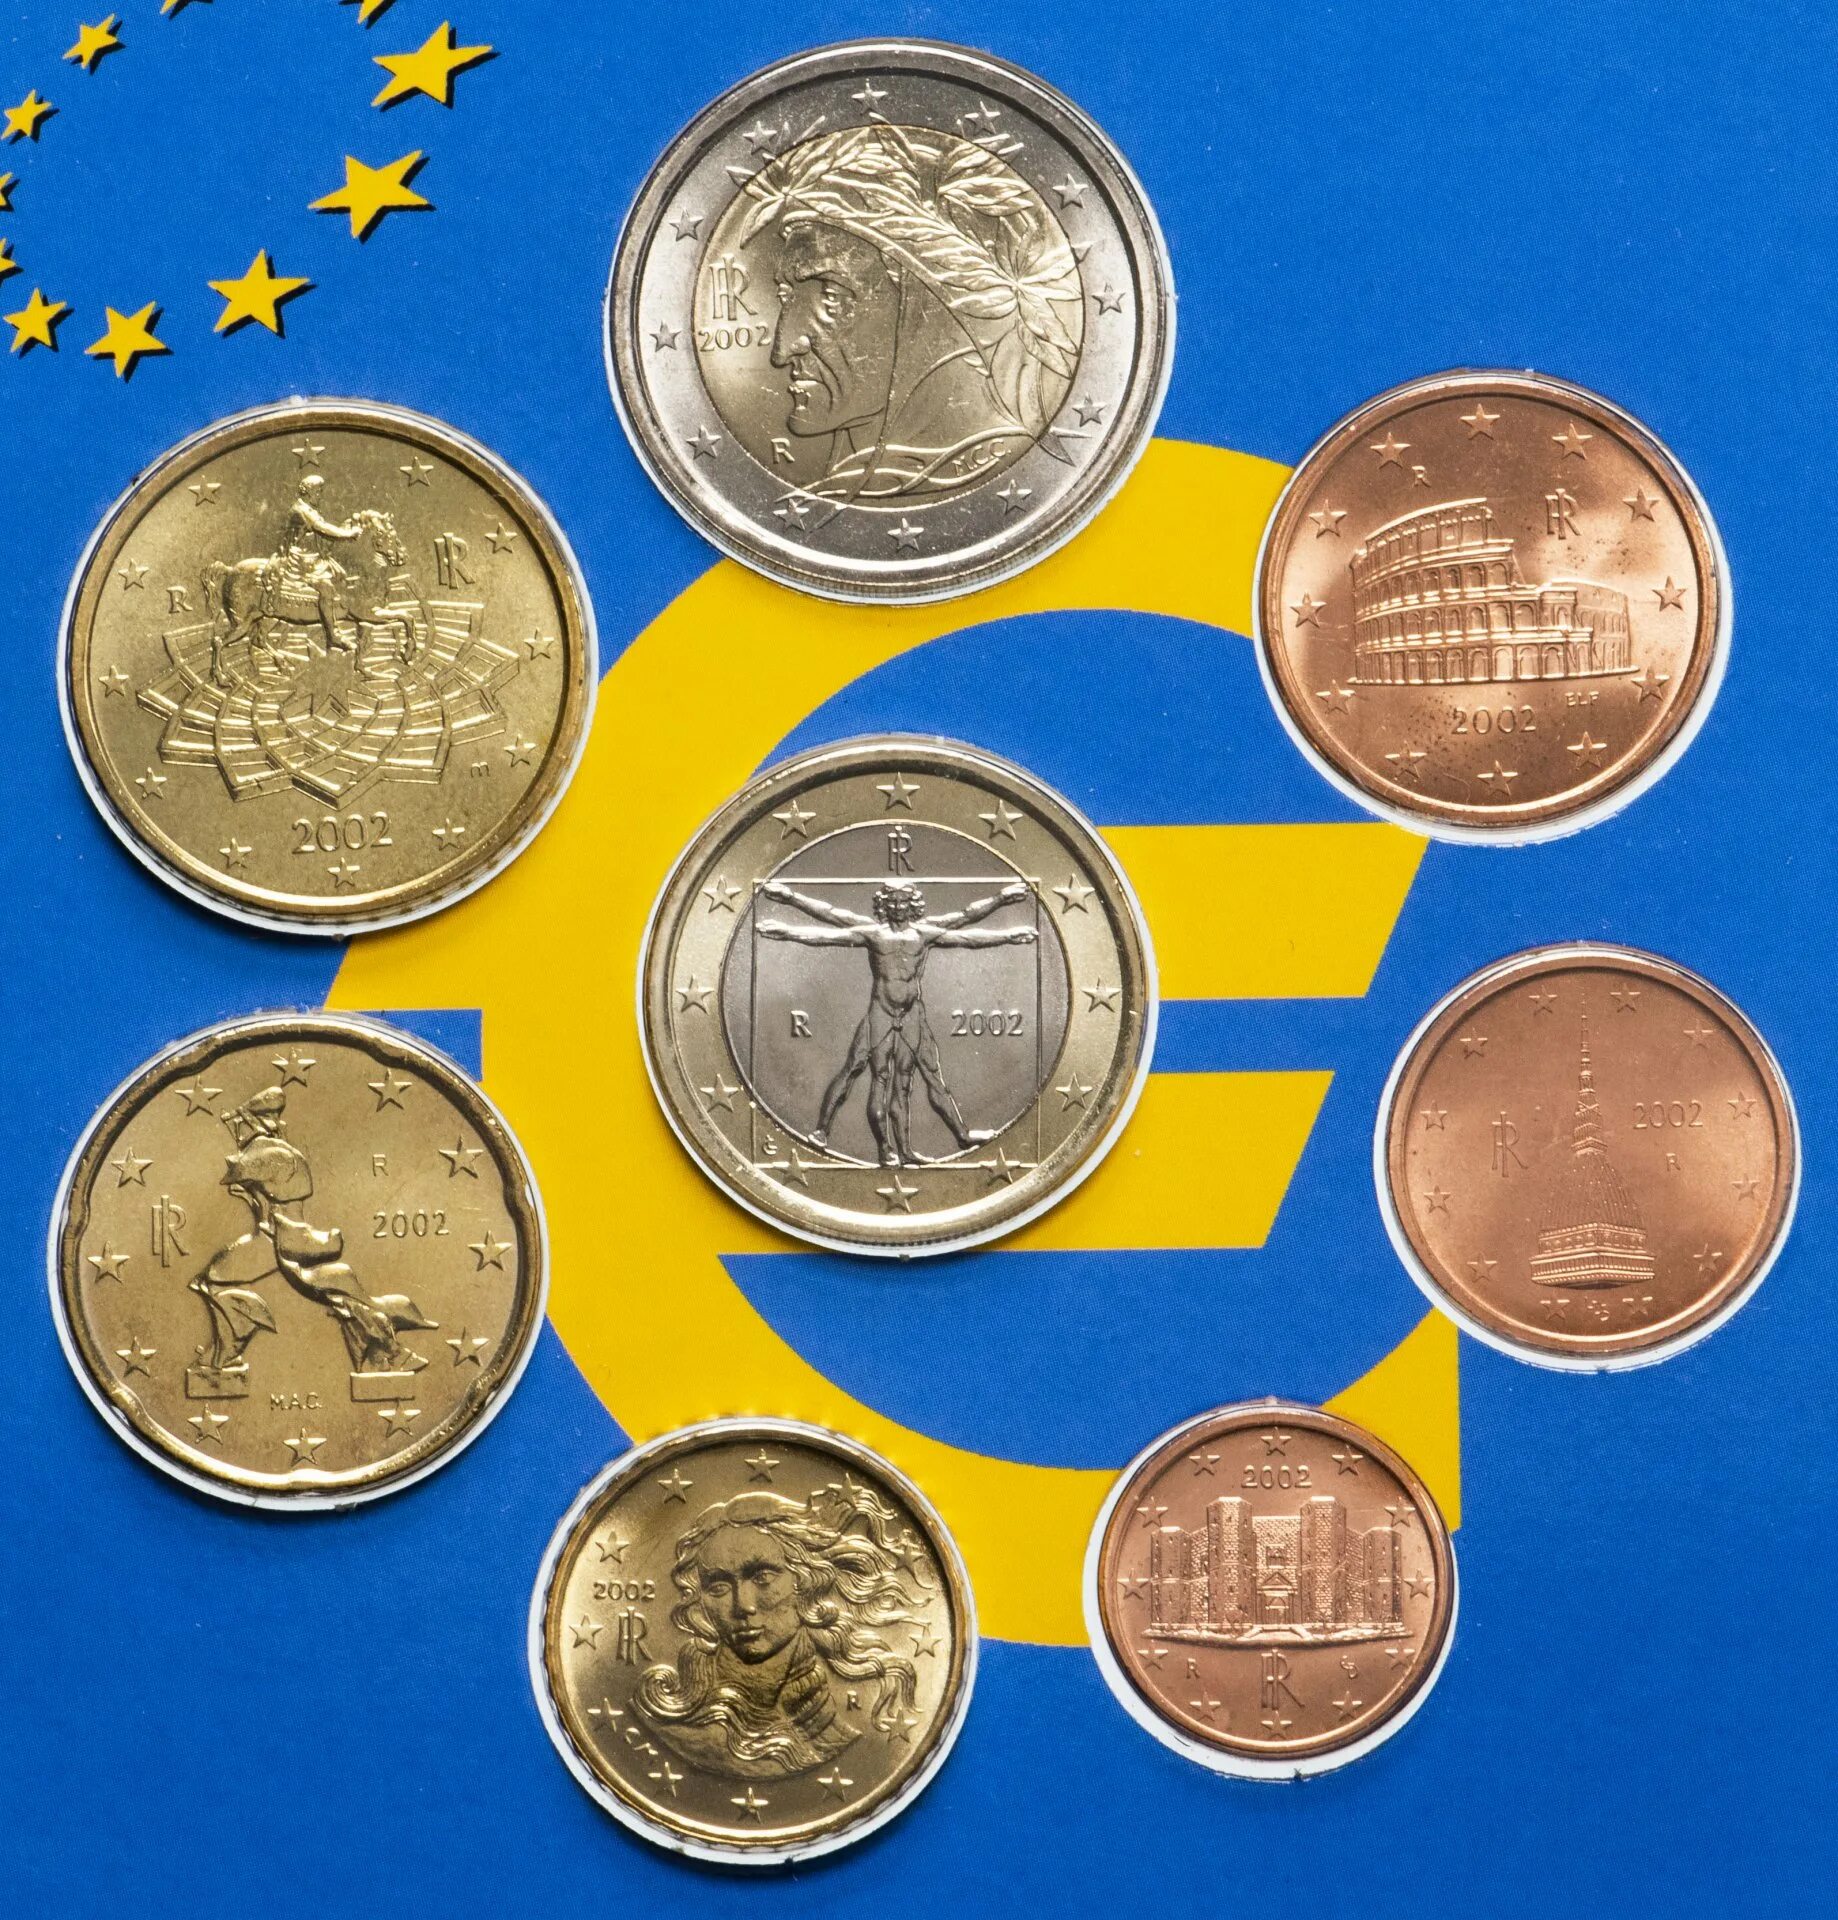 Сколько монет евро. Евро монета 2002. Годовой набор евро 2002. Евро монеты Италии 2002 года. Набор монет 2002.